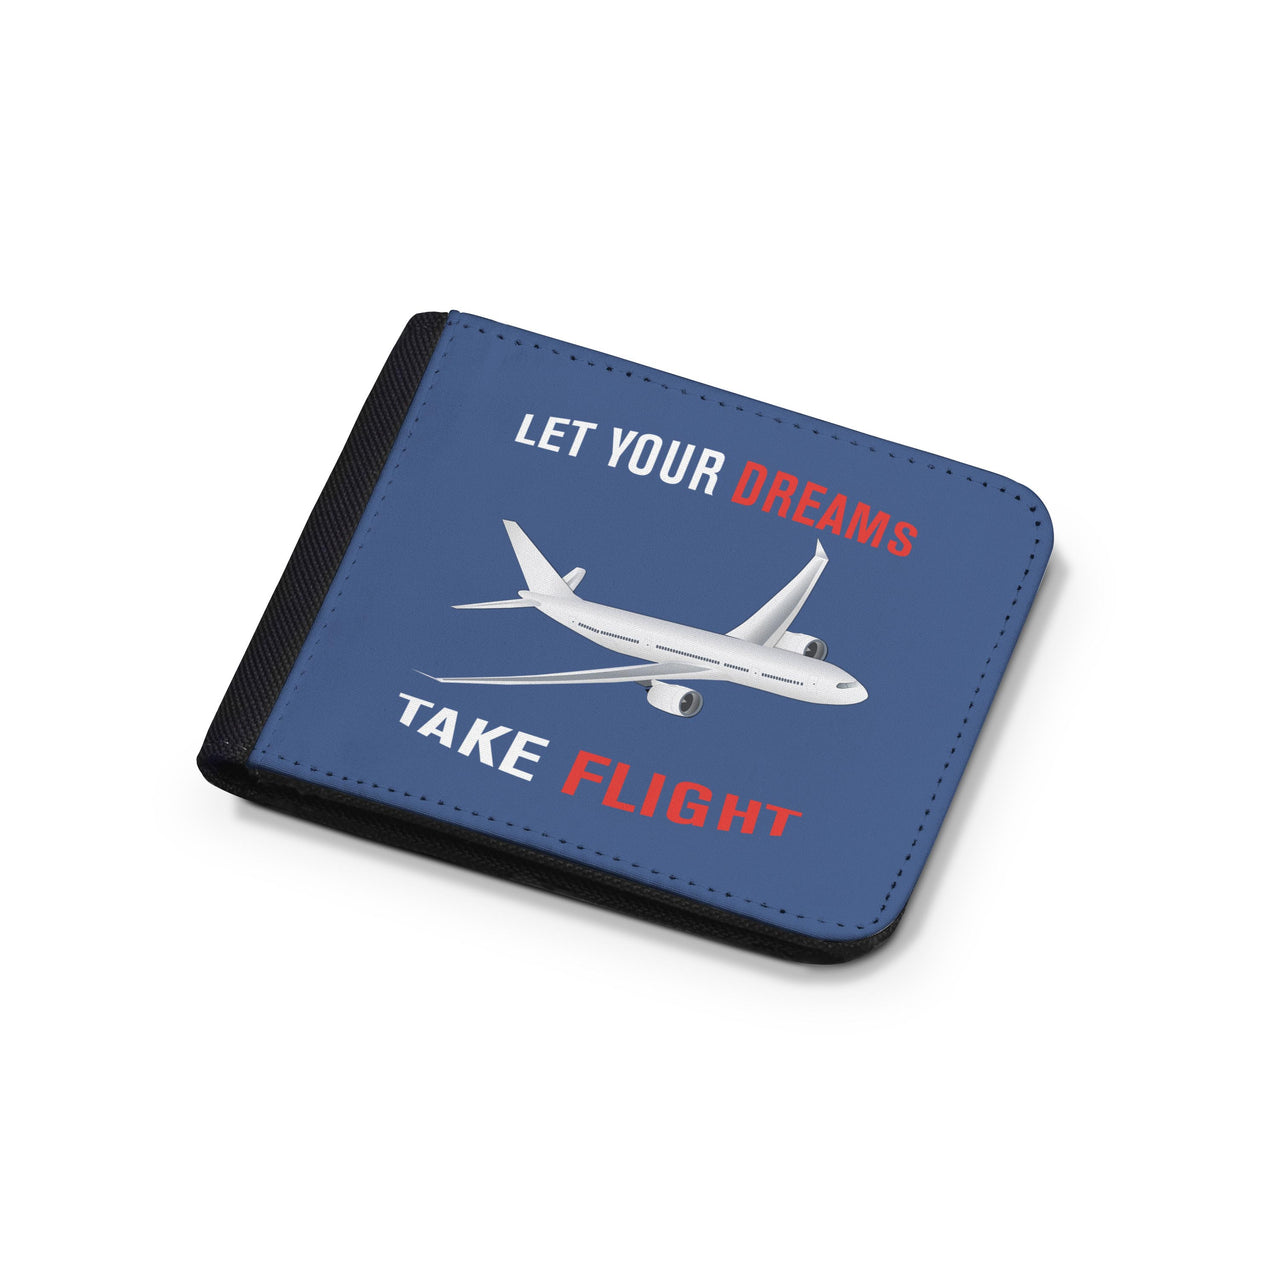 Let Your Dreams Take Flight Designed Wallets